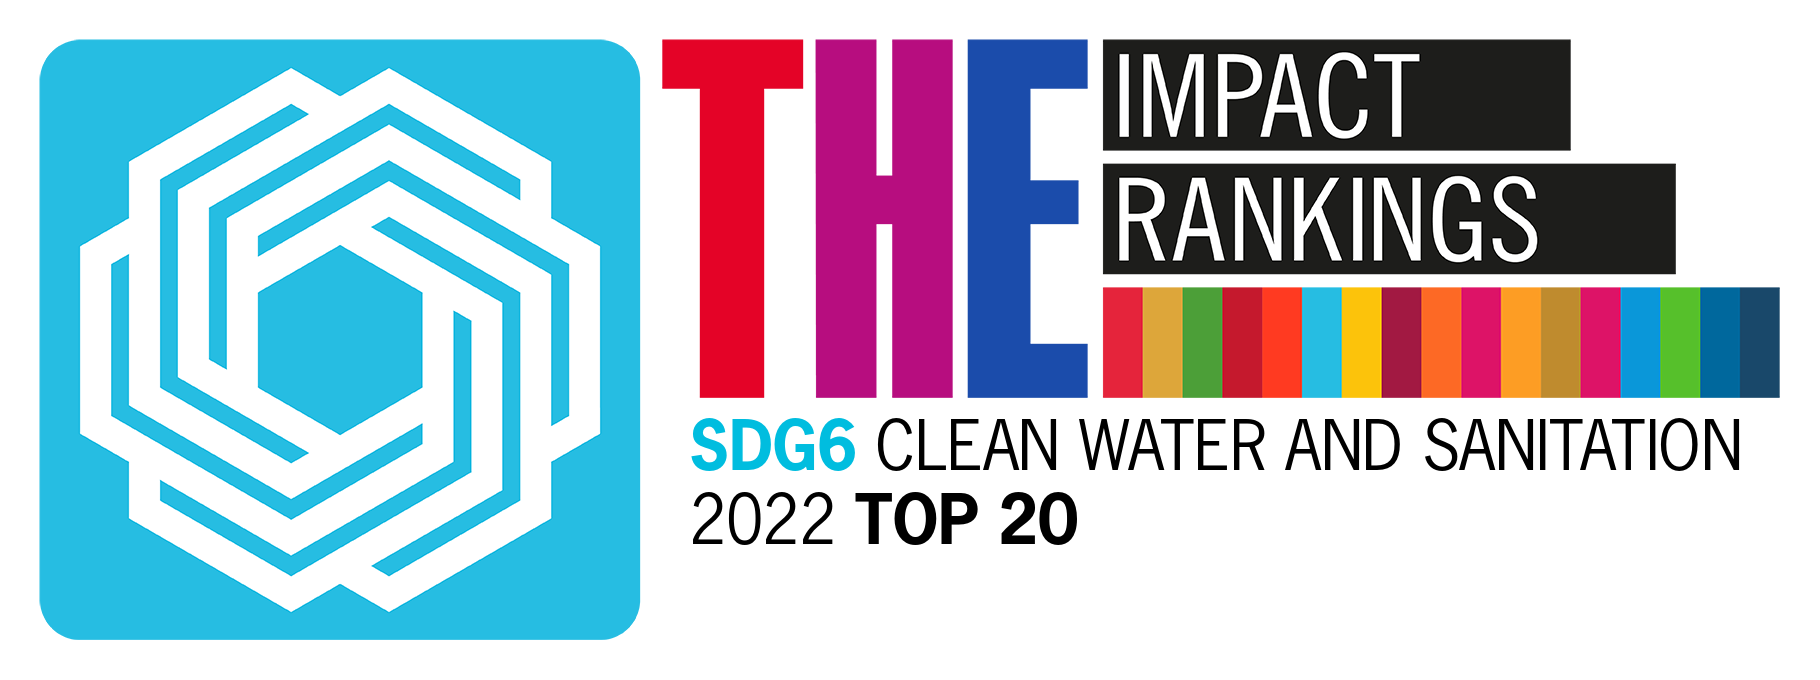 THE impact rankings SDG6 clean water and sanitation, Top 20 logo